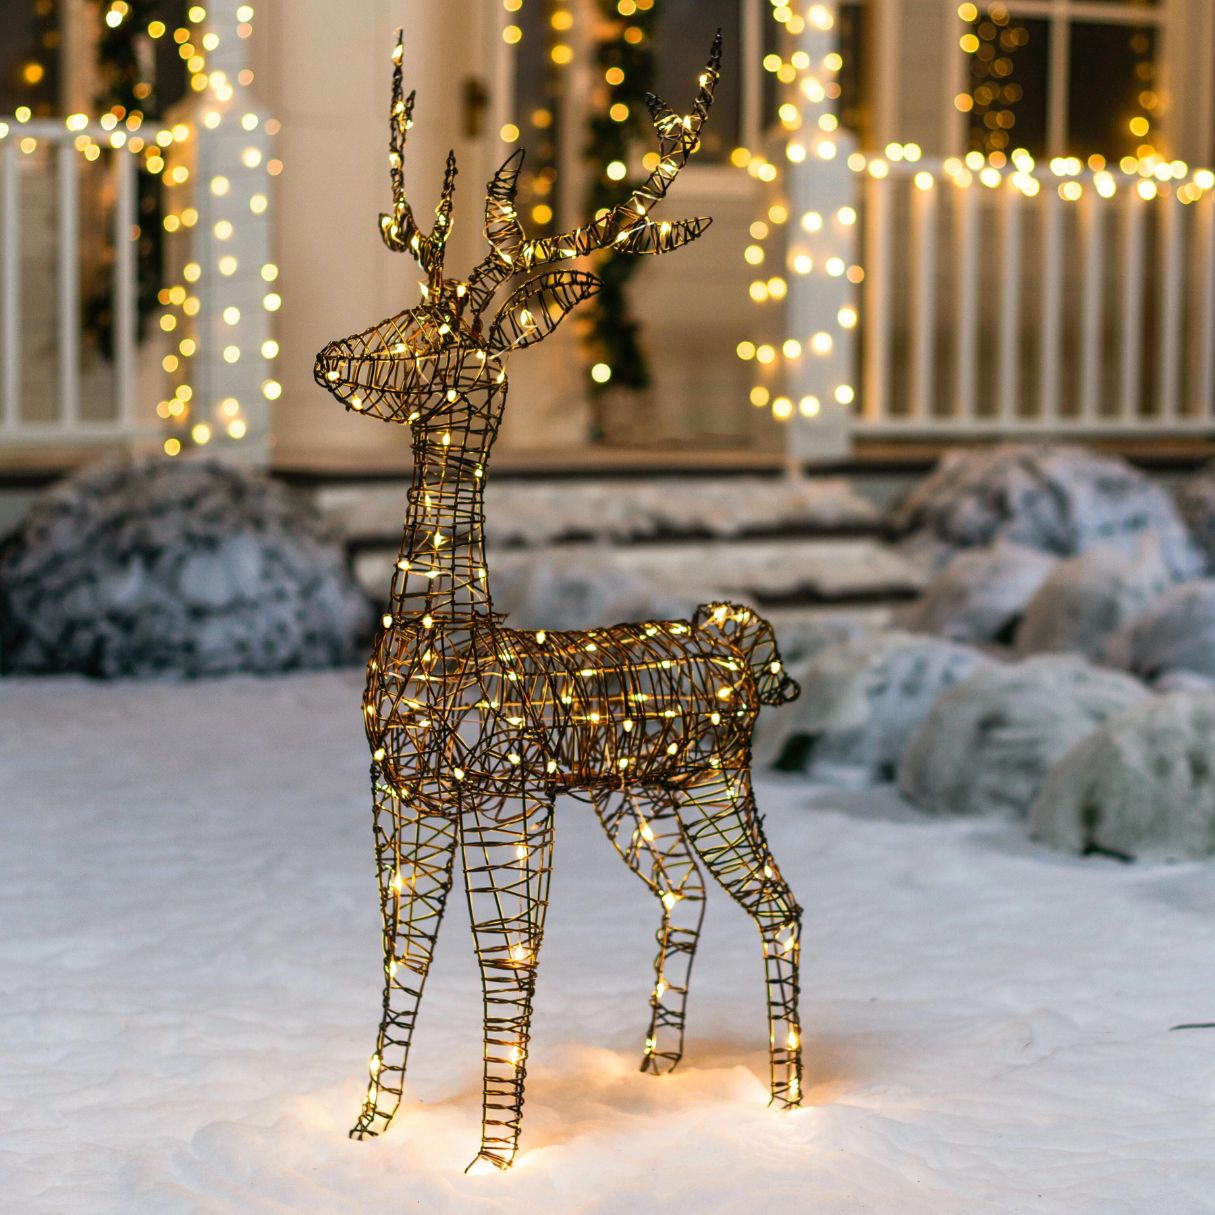 How To Store Outdoor Christmas Reindeer